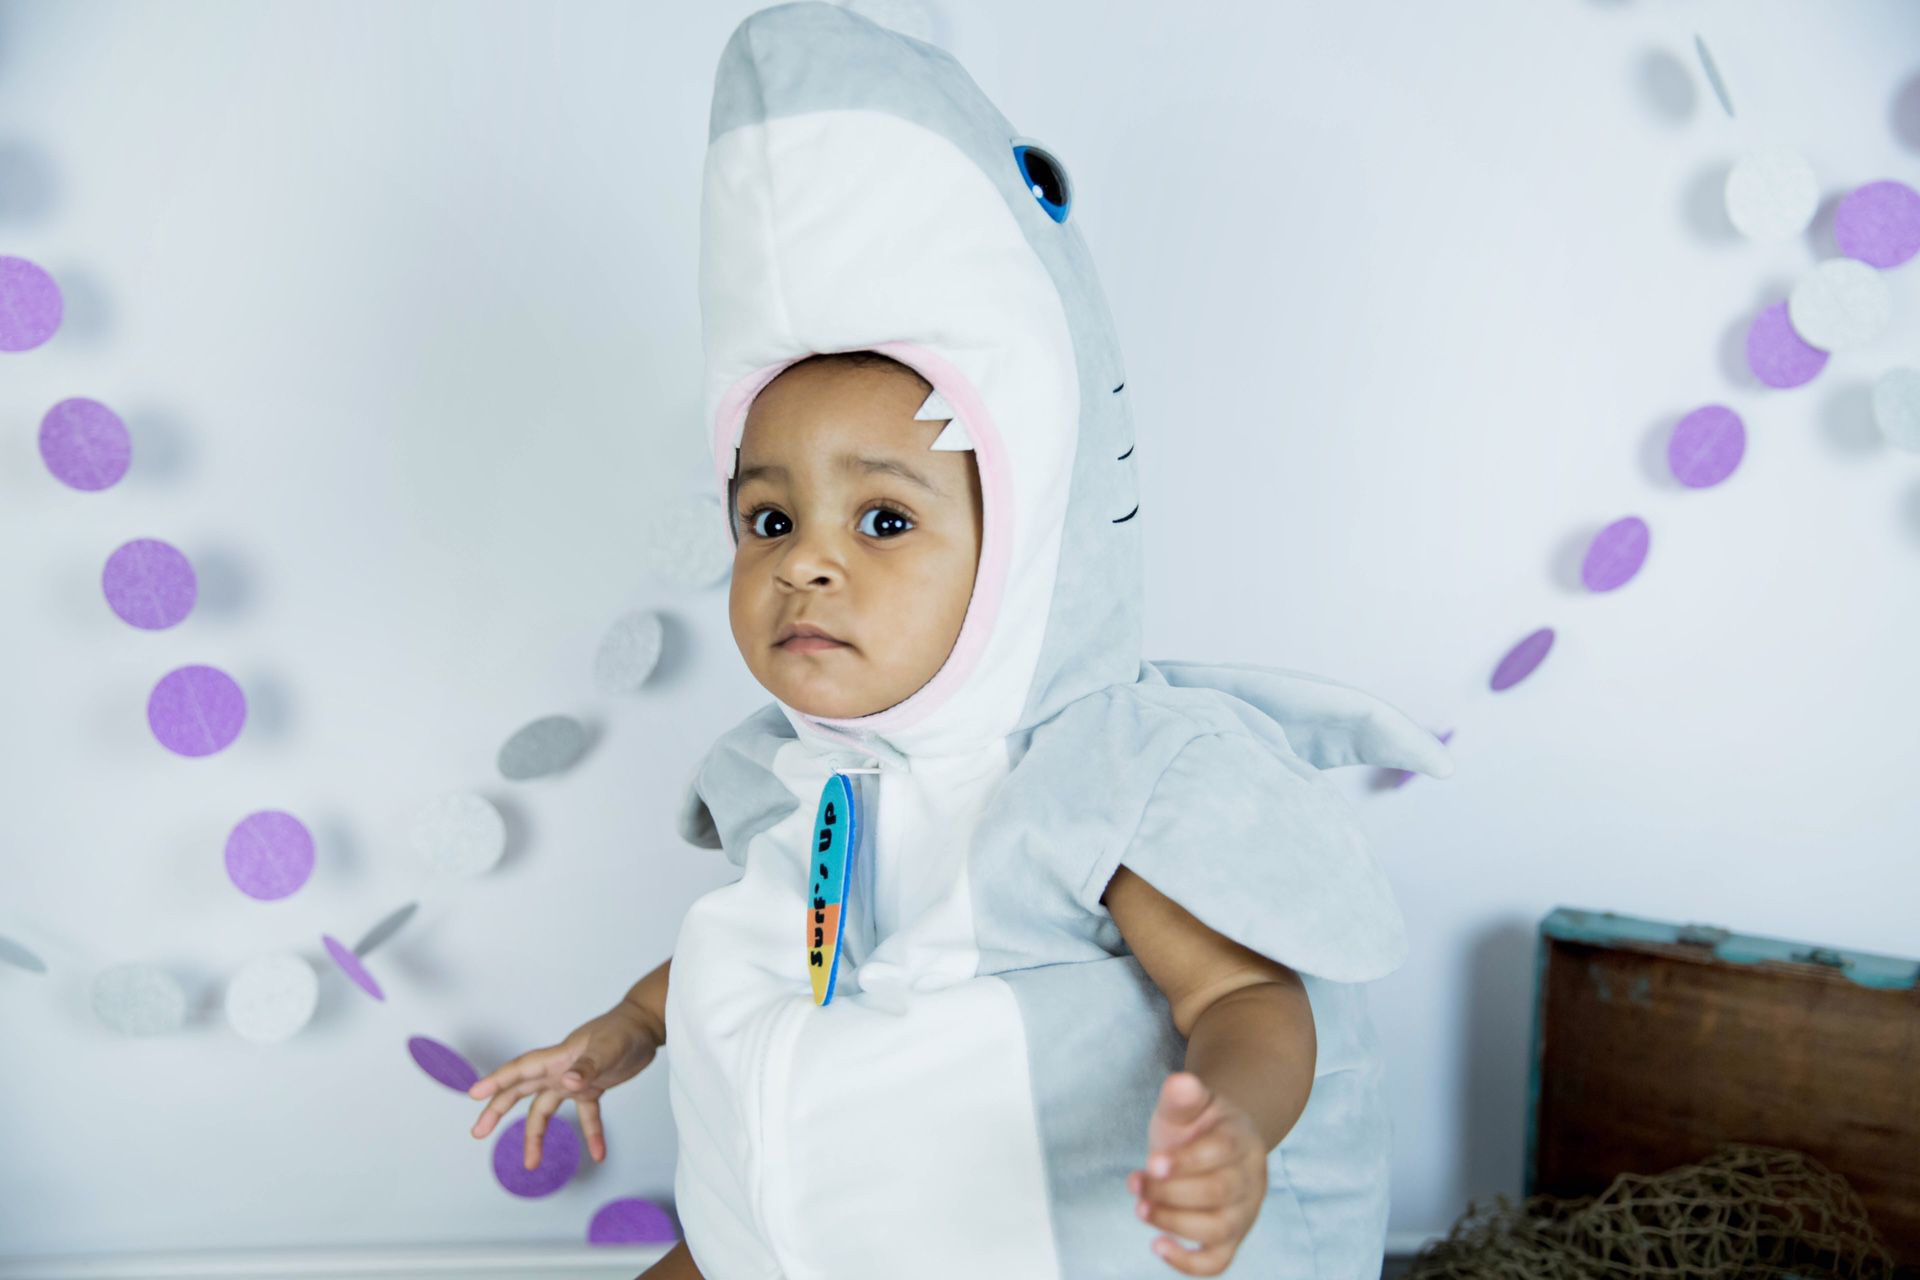 Baby shark costume 12-18 months